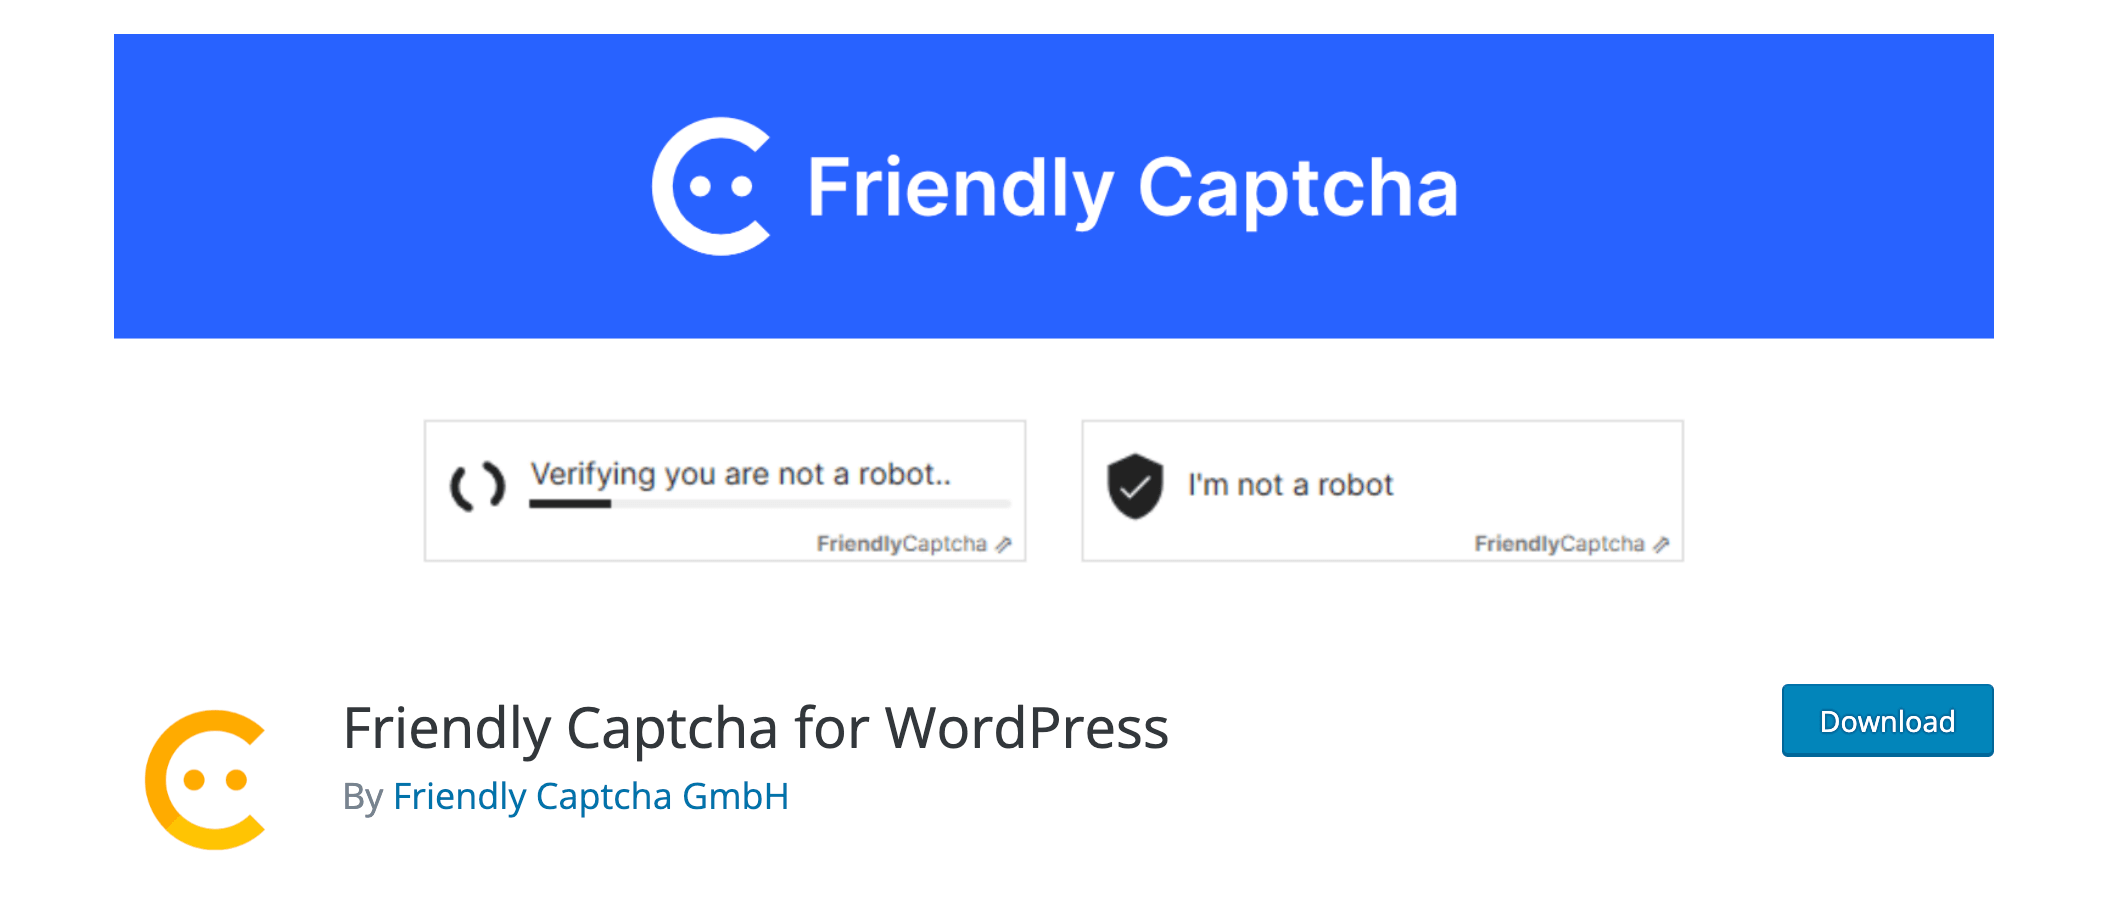 Friendly Captcha als Plugin bei WordPress.